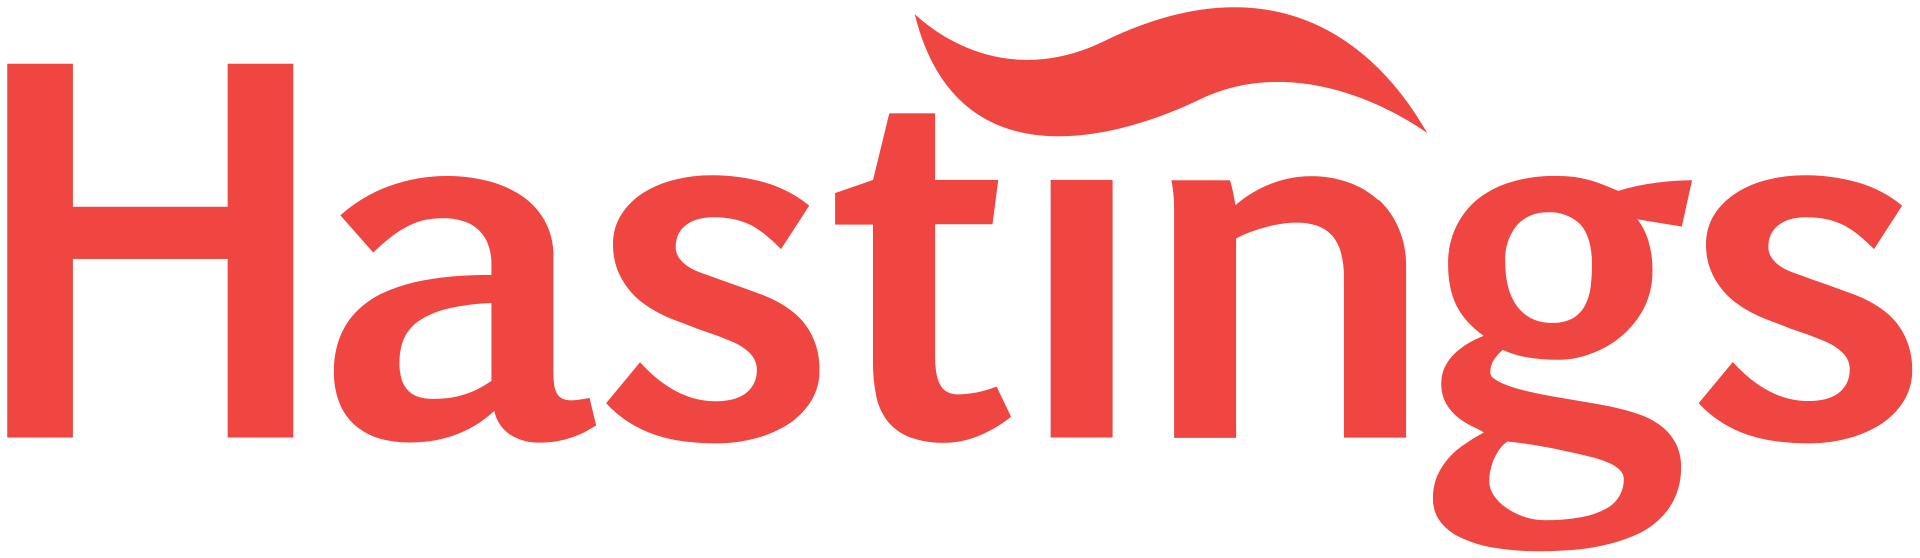 Hastings Brand Logo